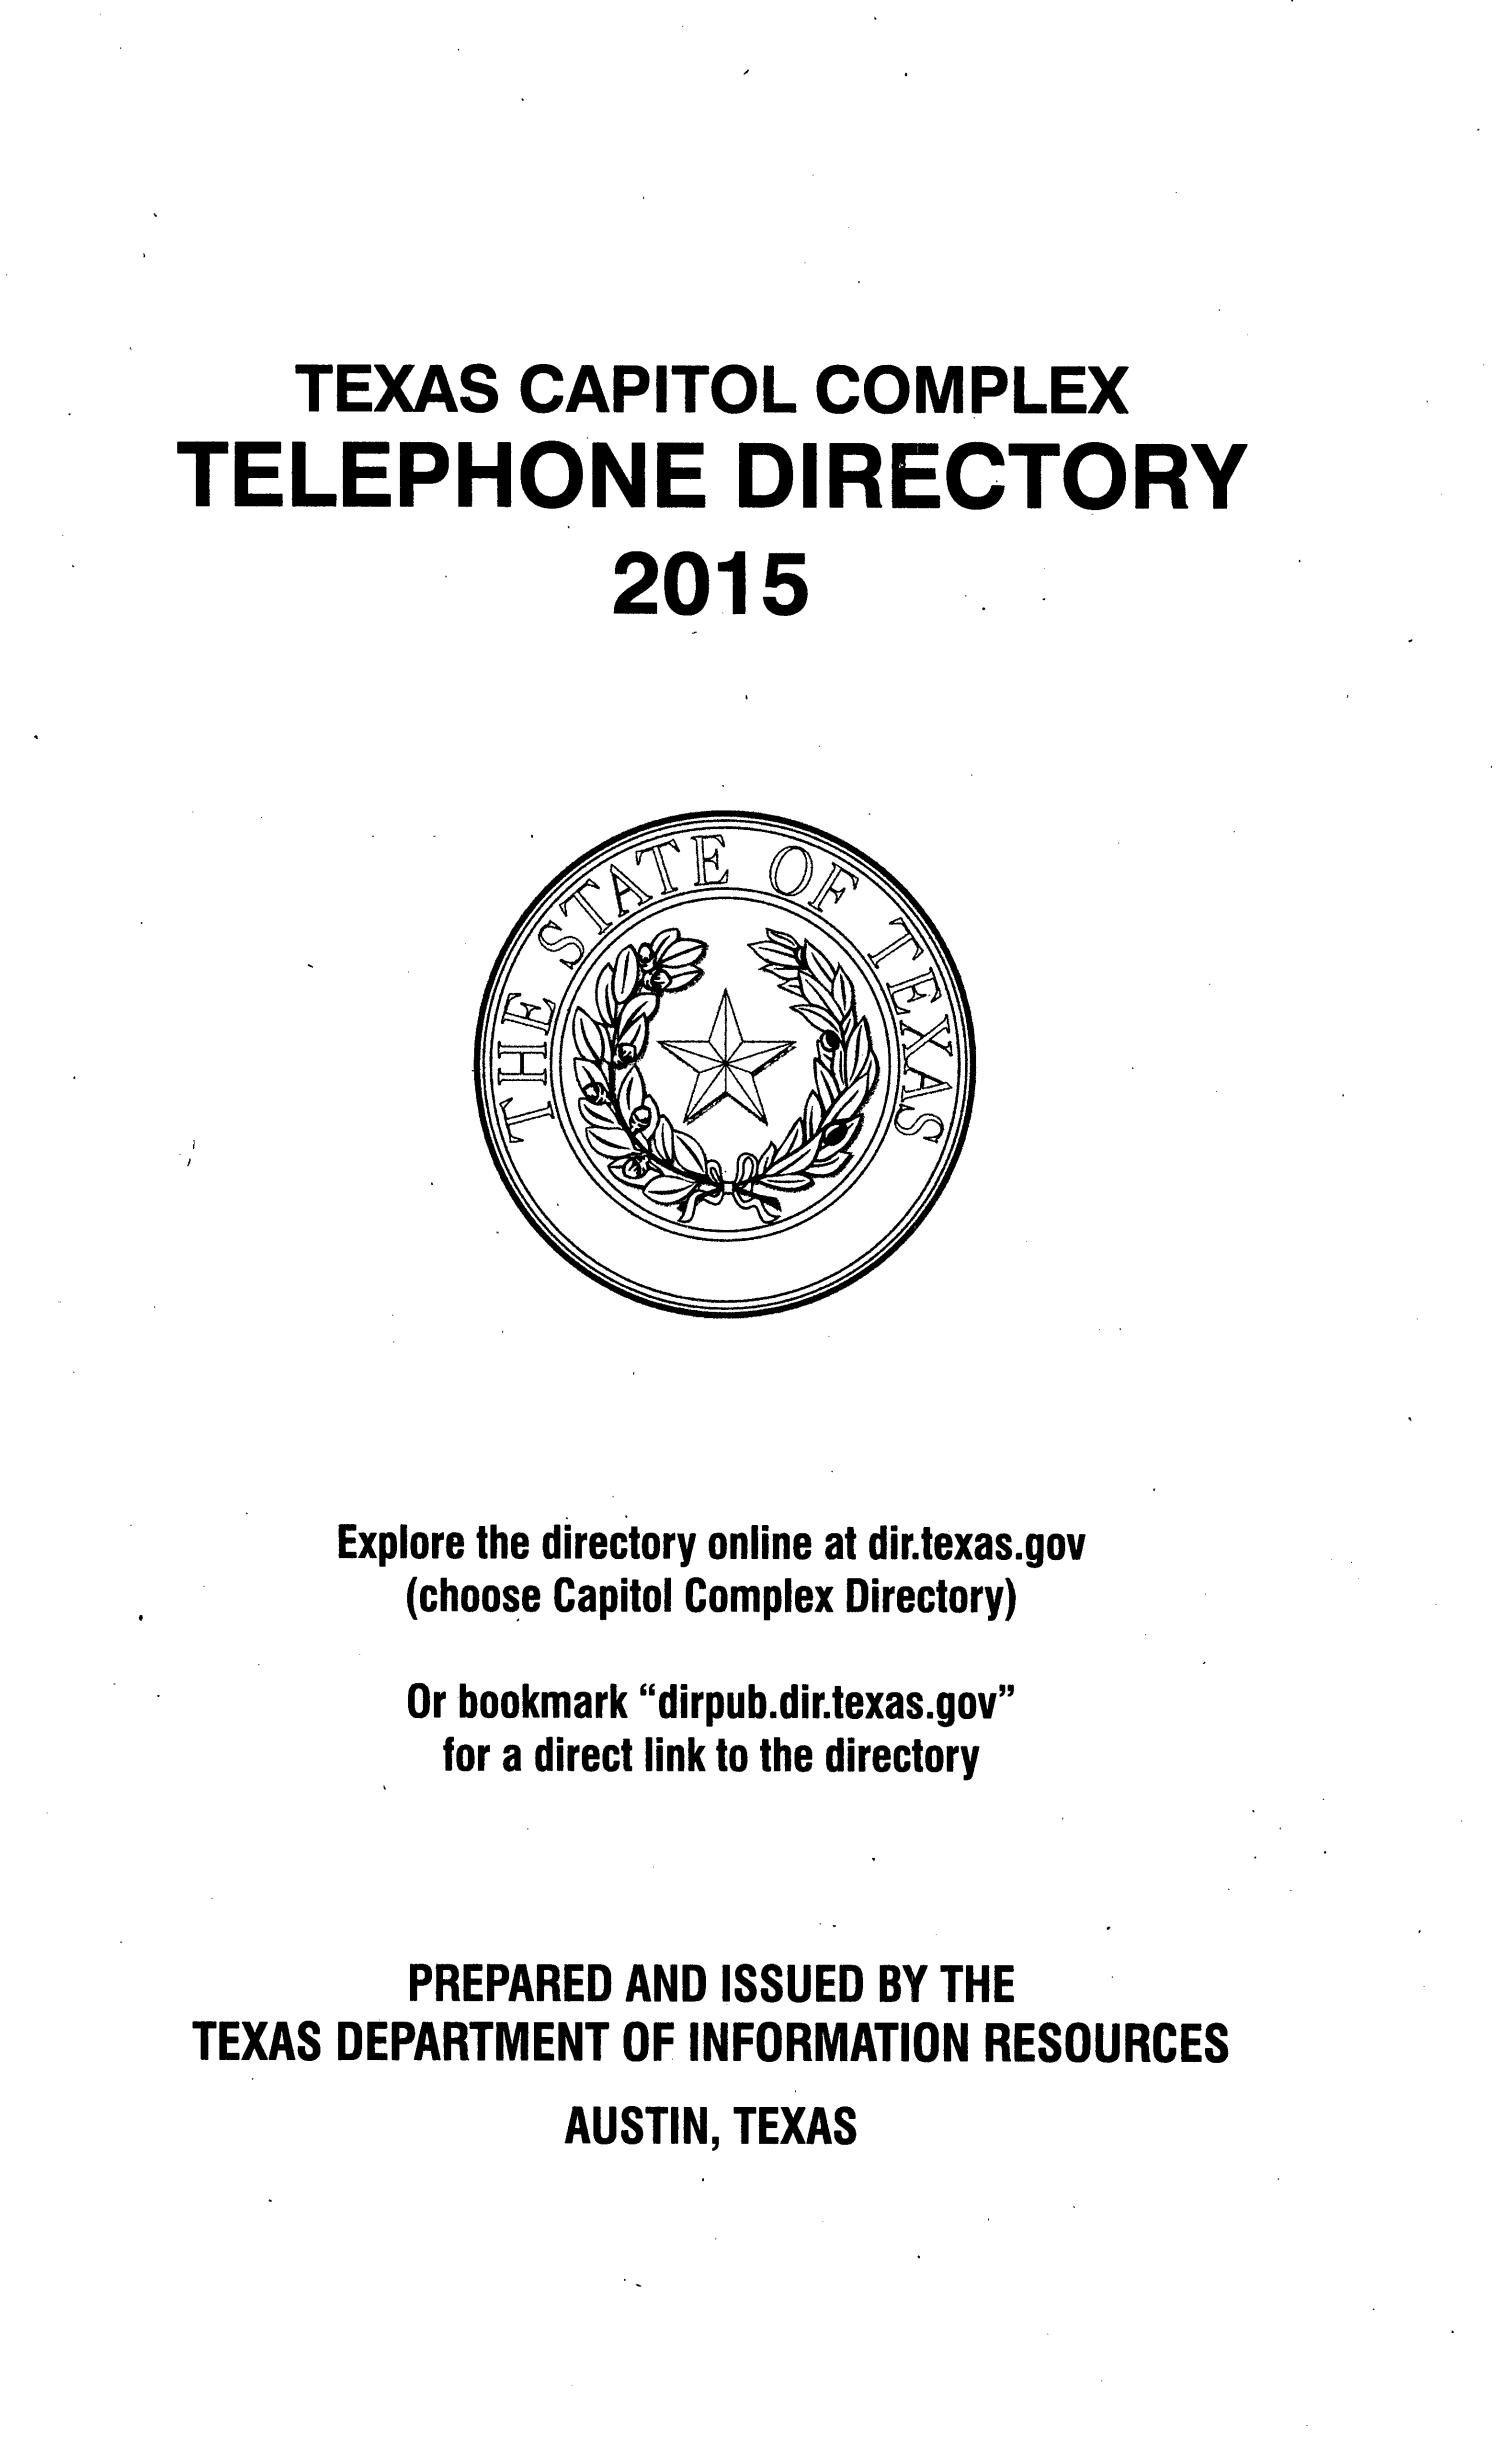 Texas Capitol Complex Telephone Directory, 2015
                                                
                                                    1
                                                